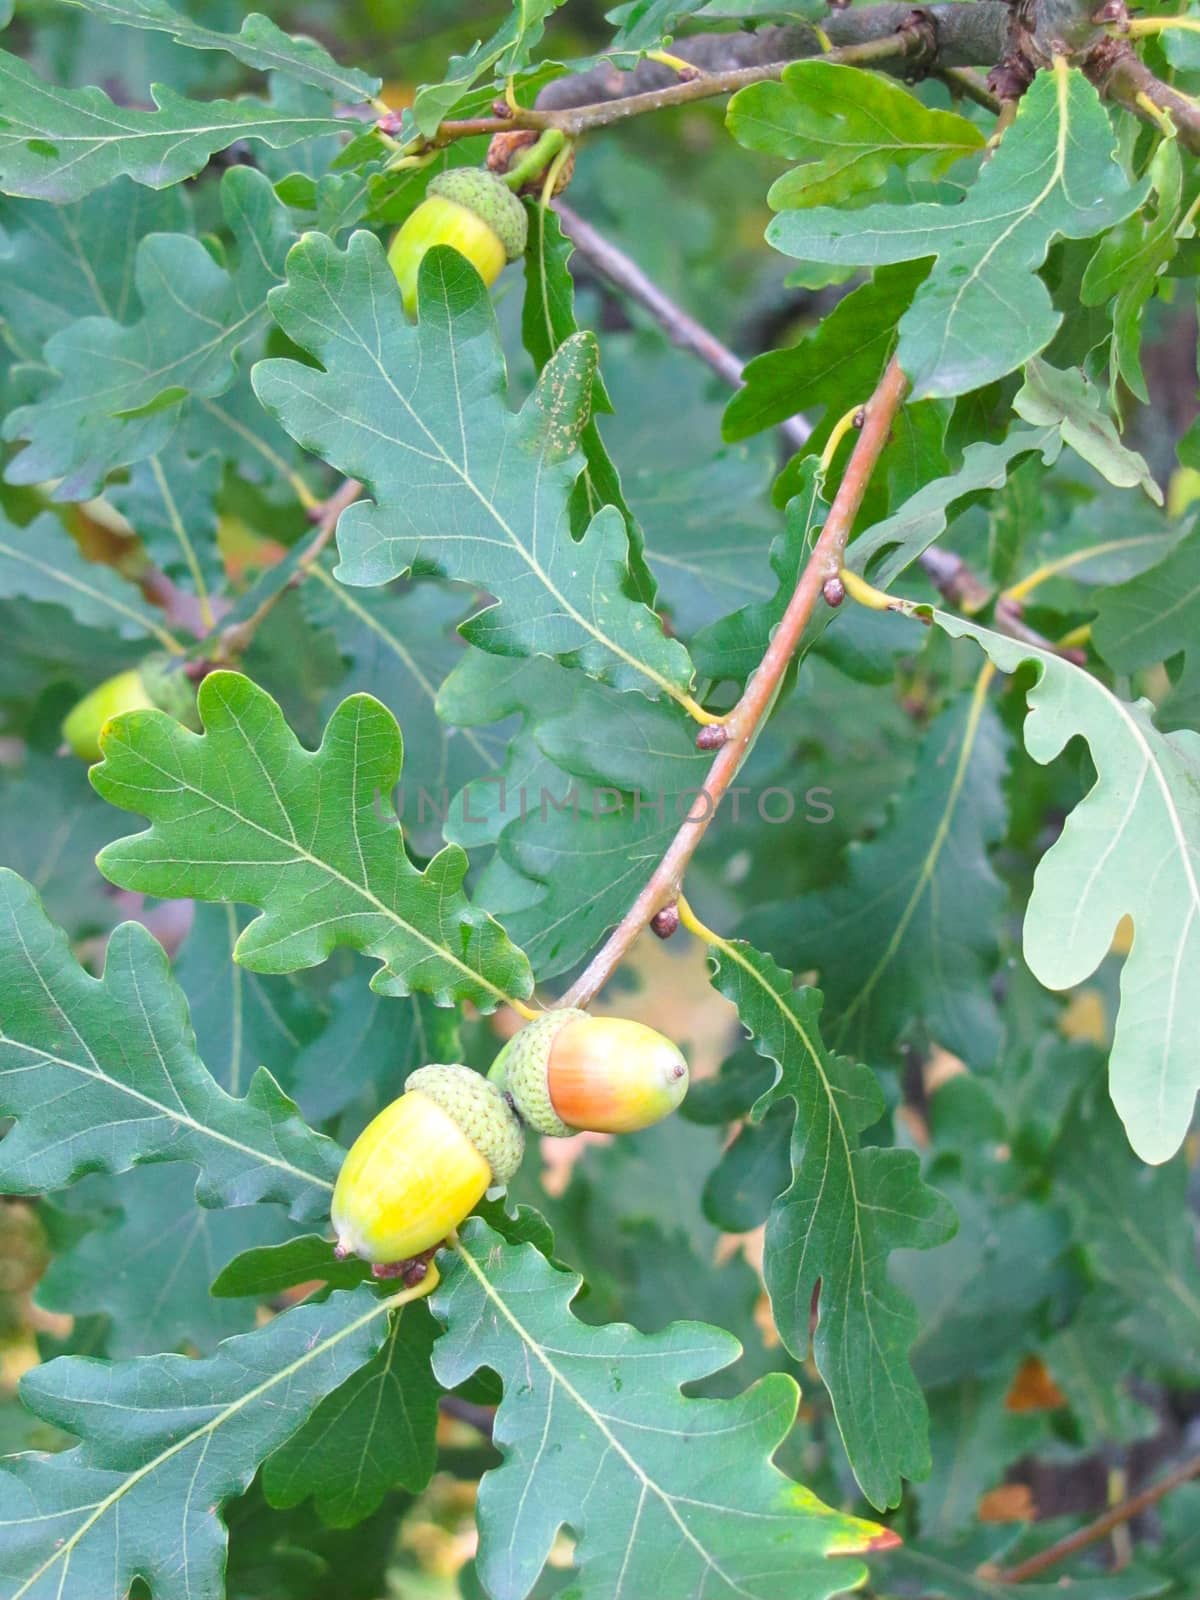 acorns on a branch by rodakm